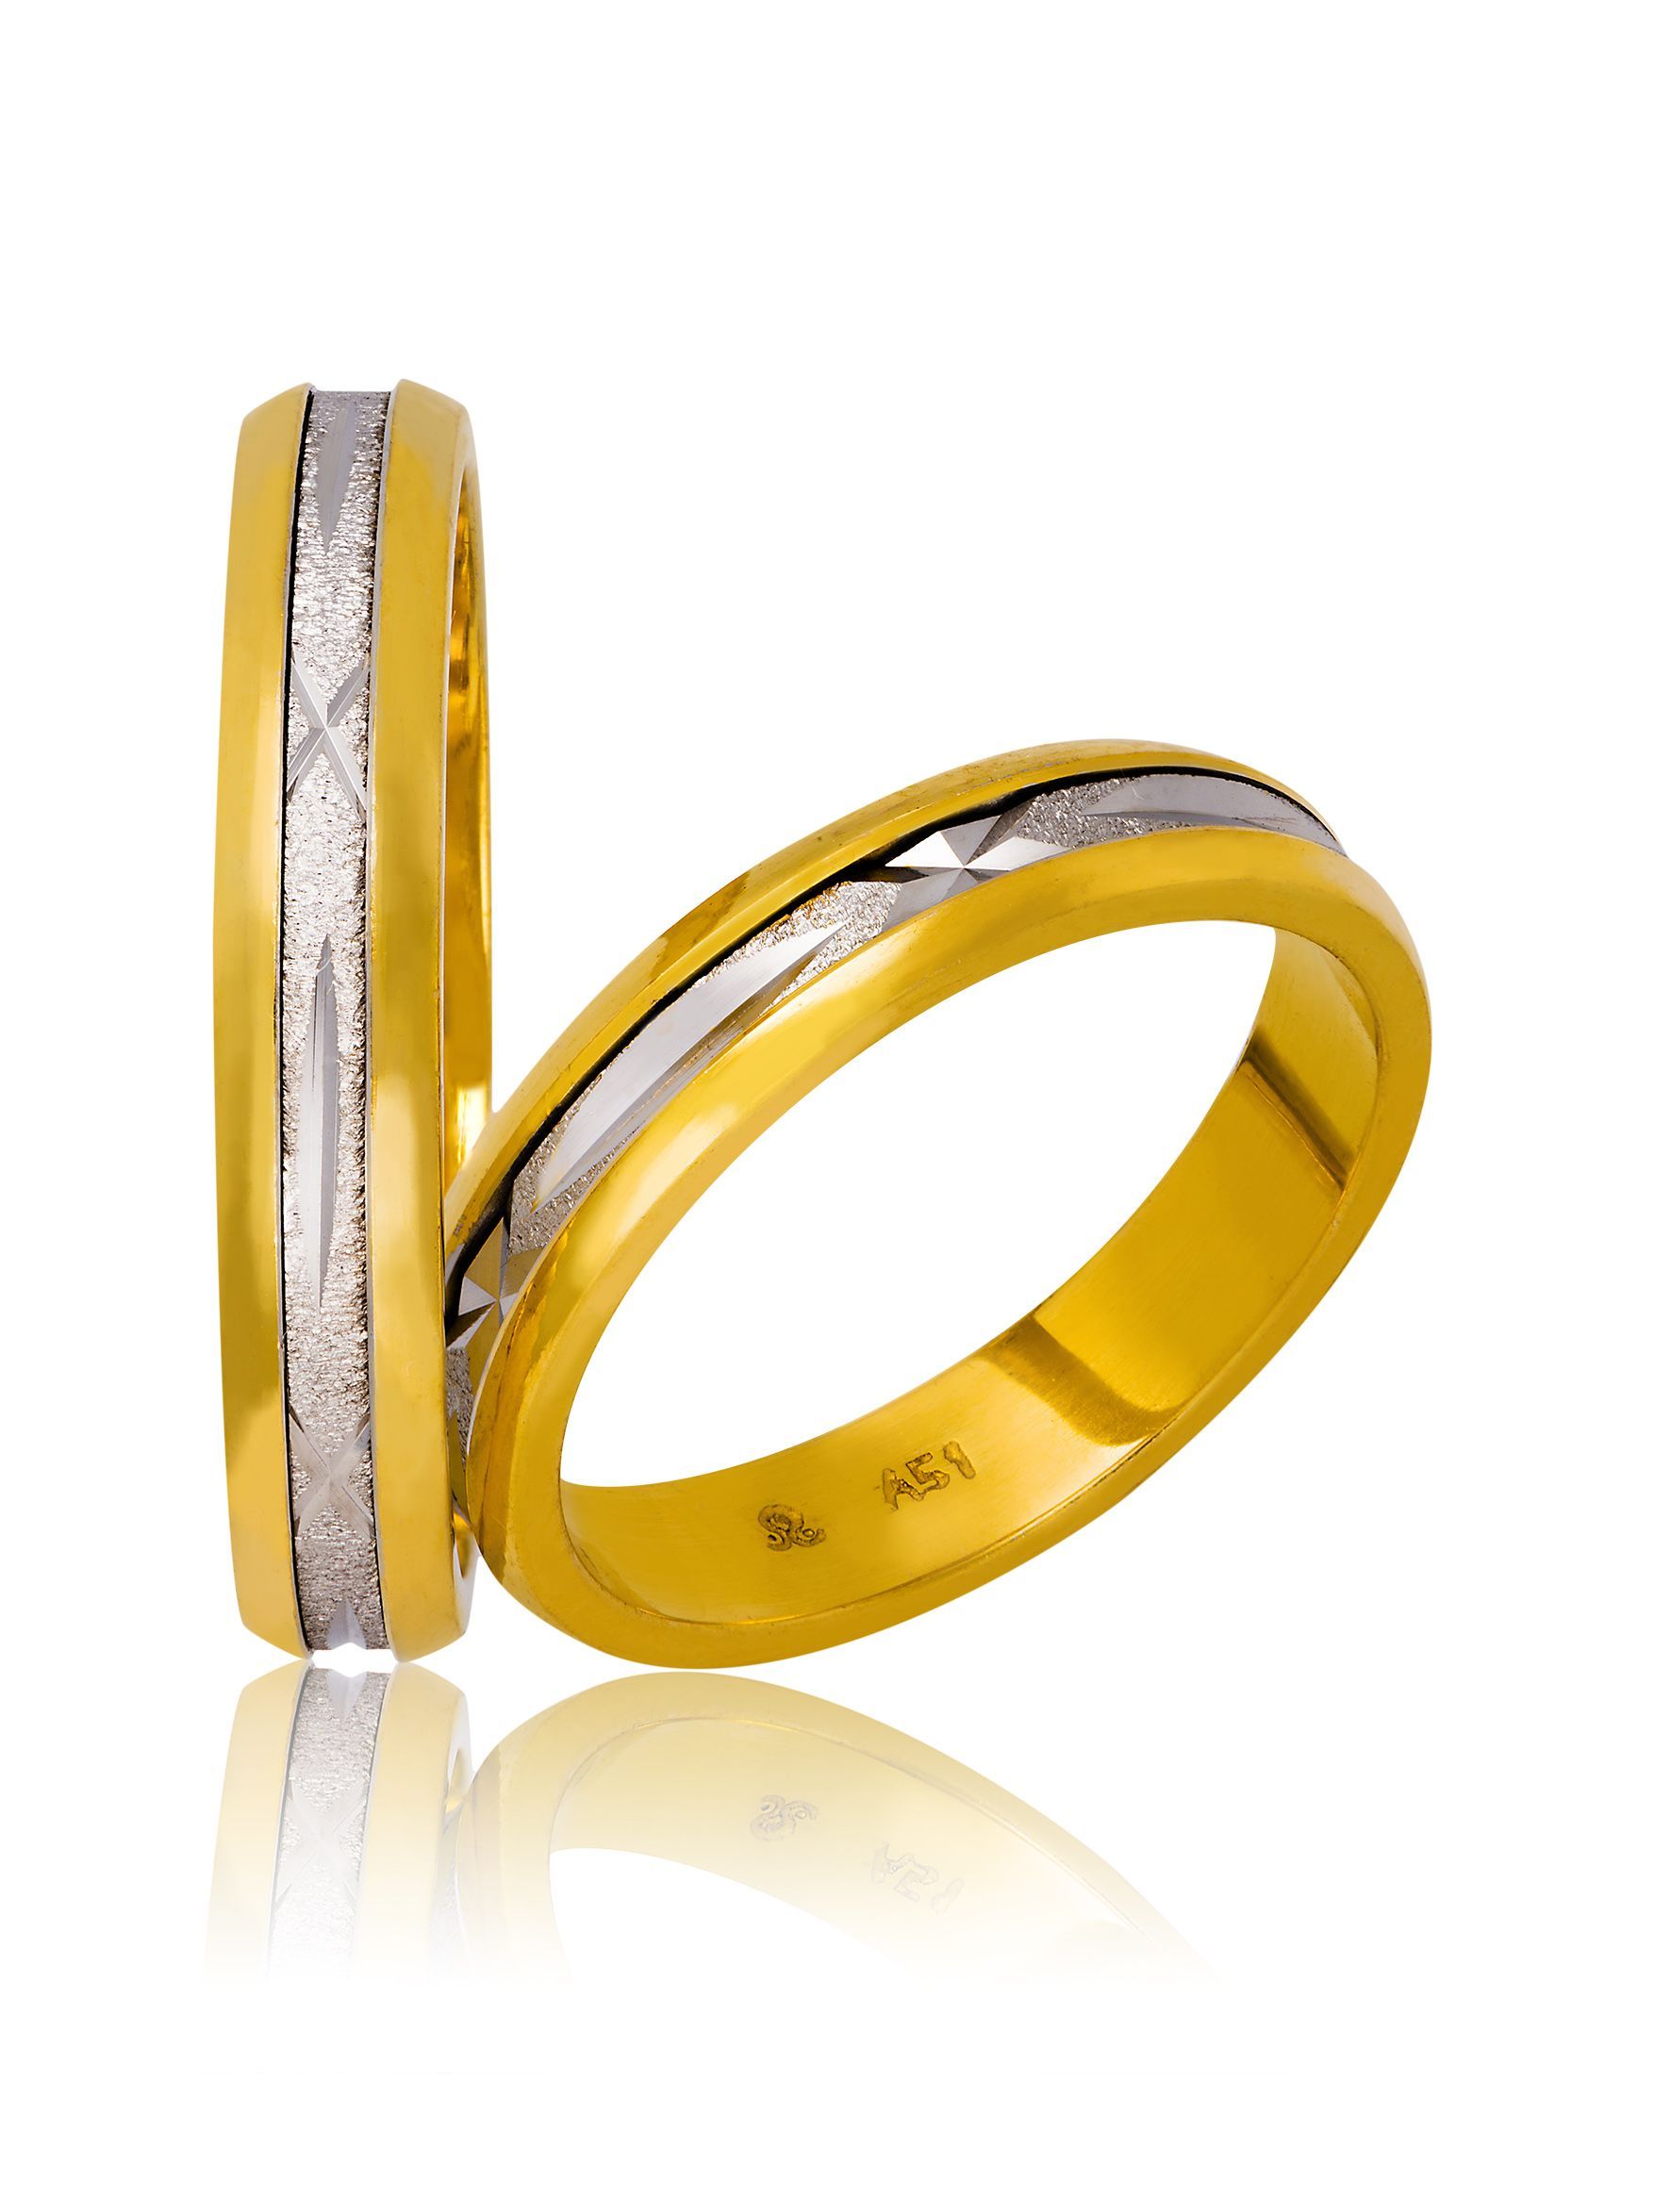 White gold & gold wedding rings 4.3mm(code 719)